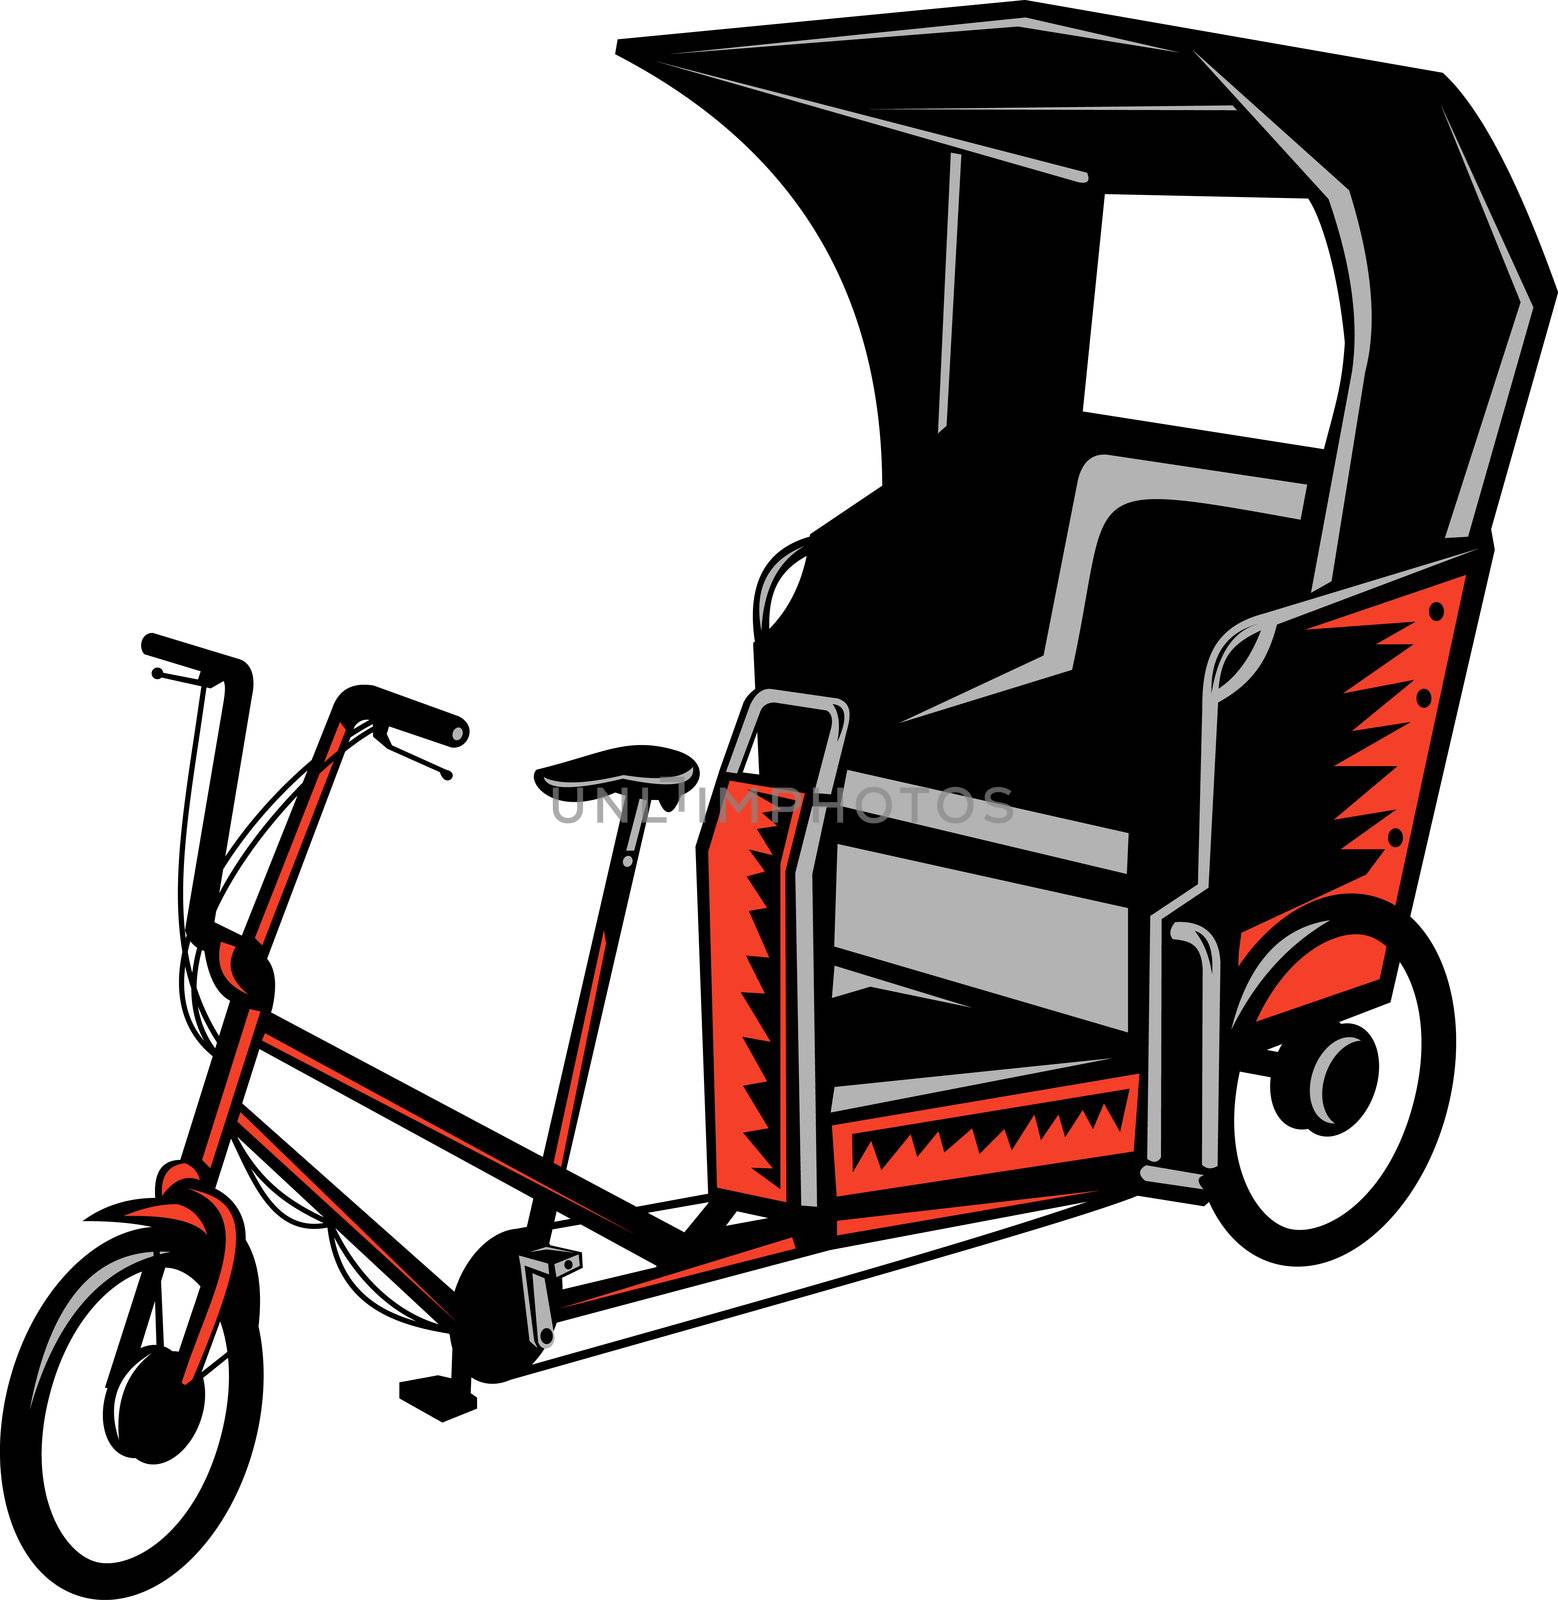 illustration of a Cycle Rickshaw isolated on white background